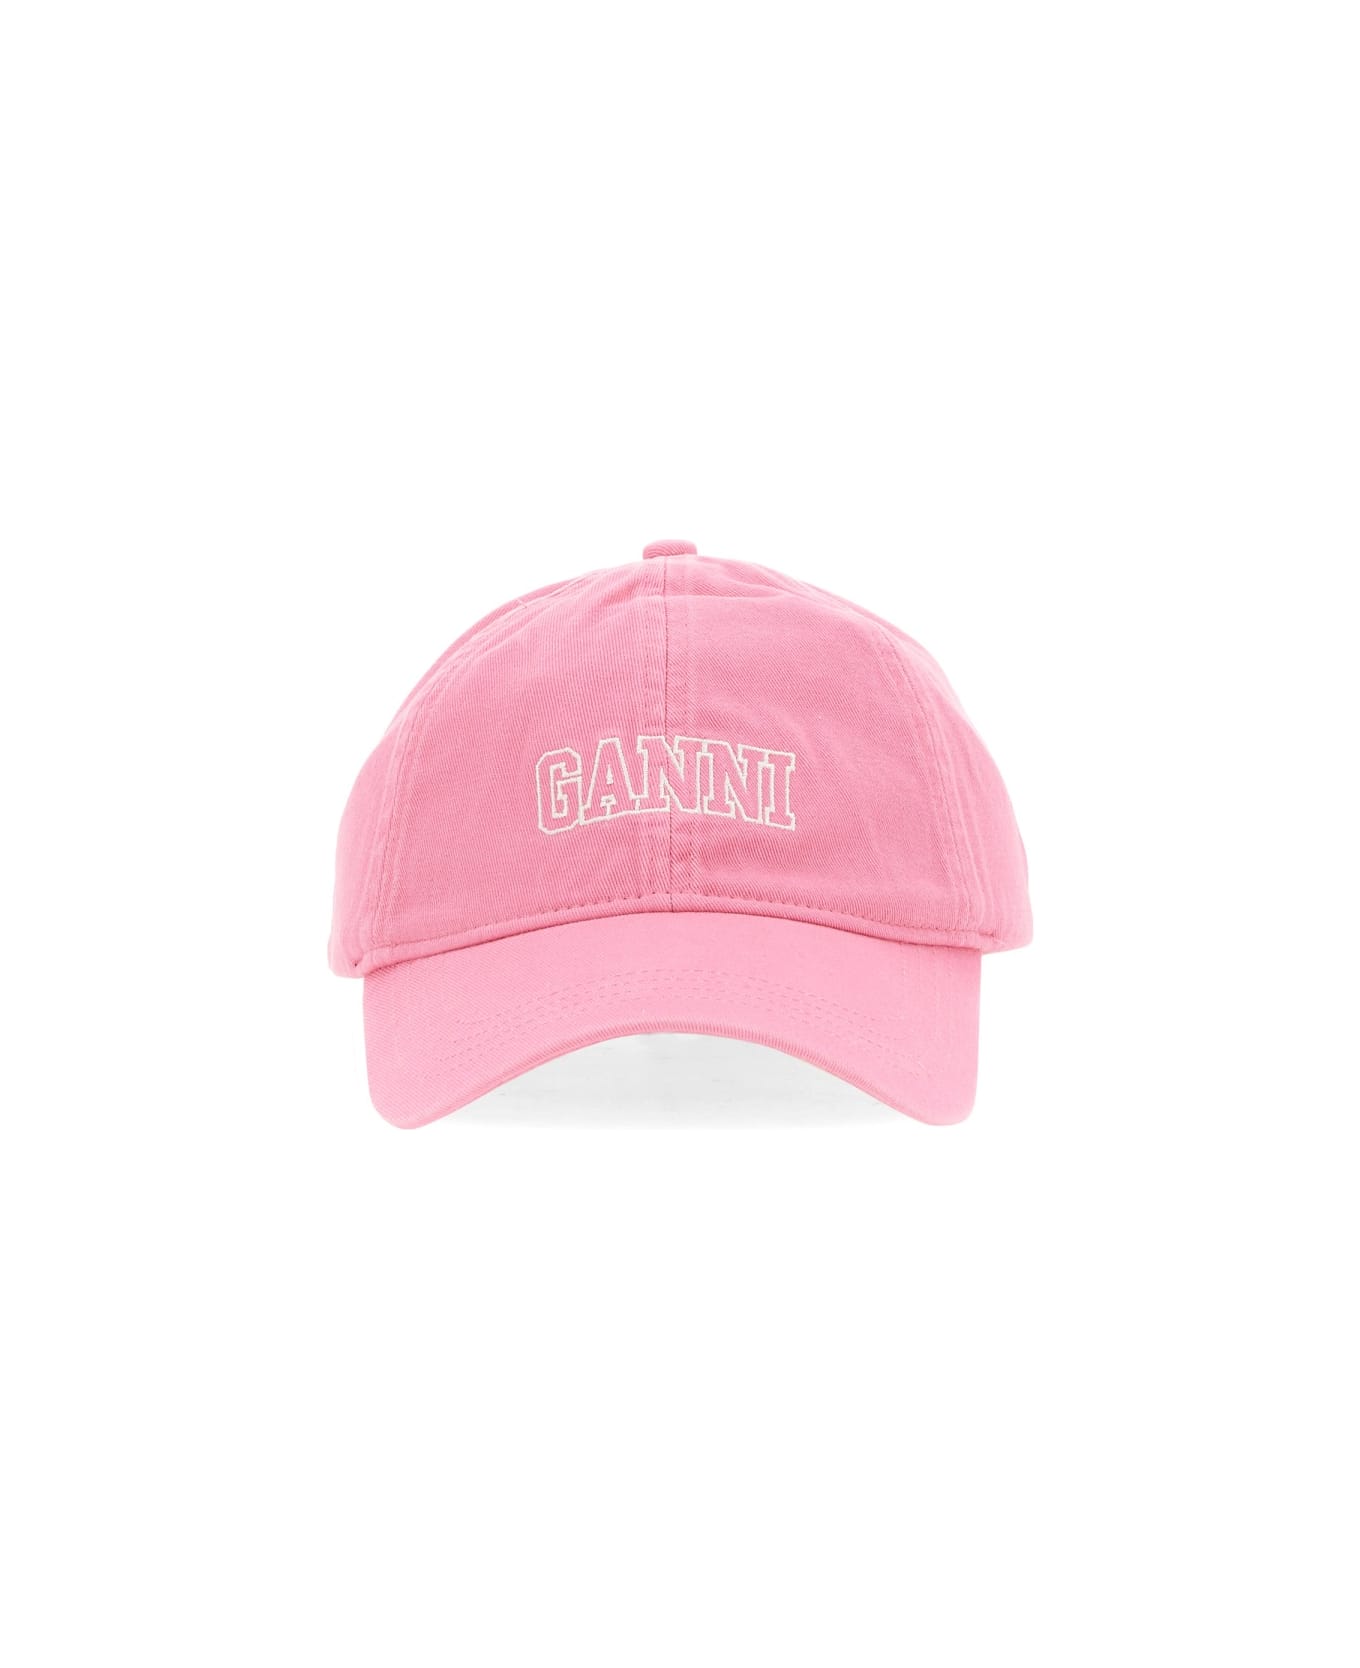 Ganni Baseball Cap - Pink